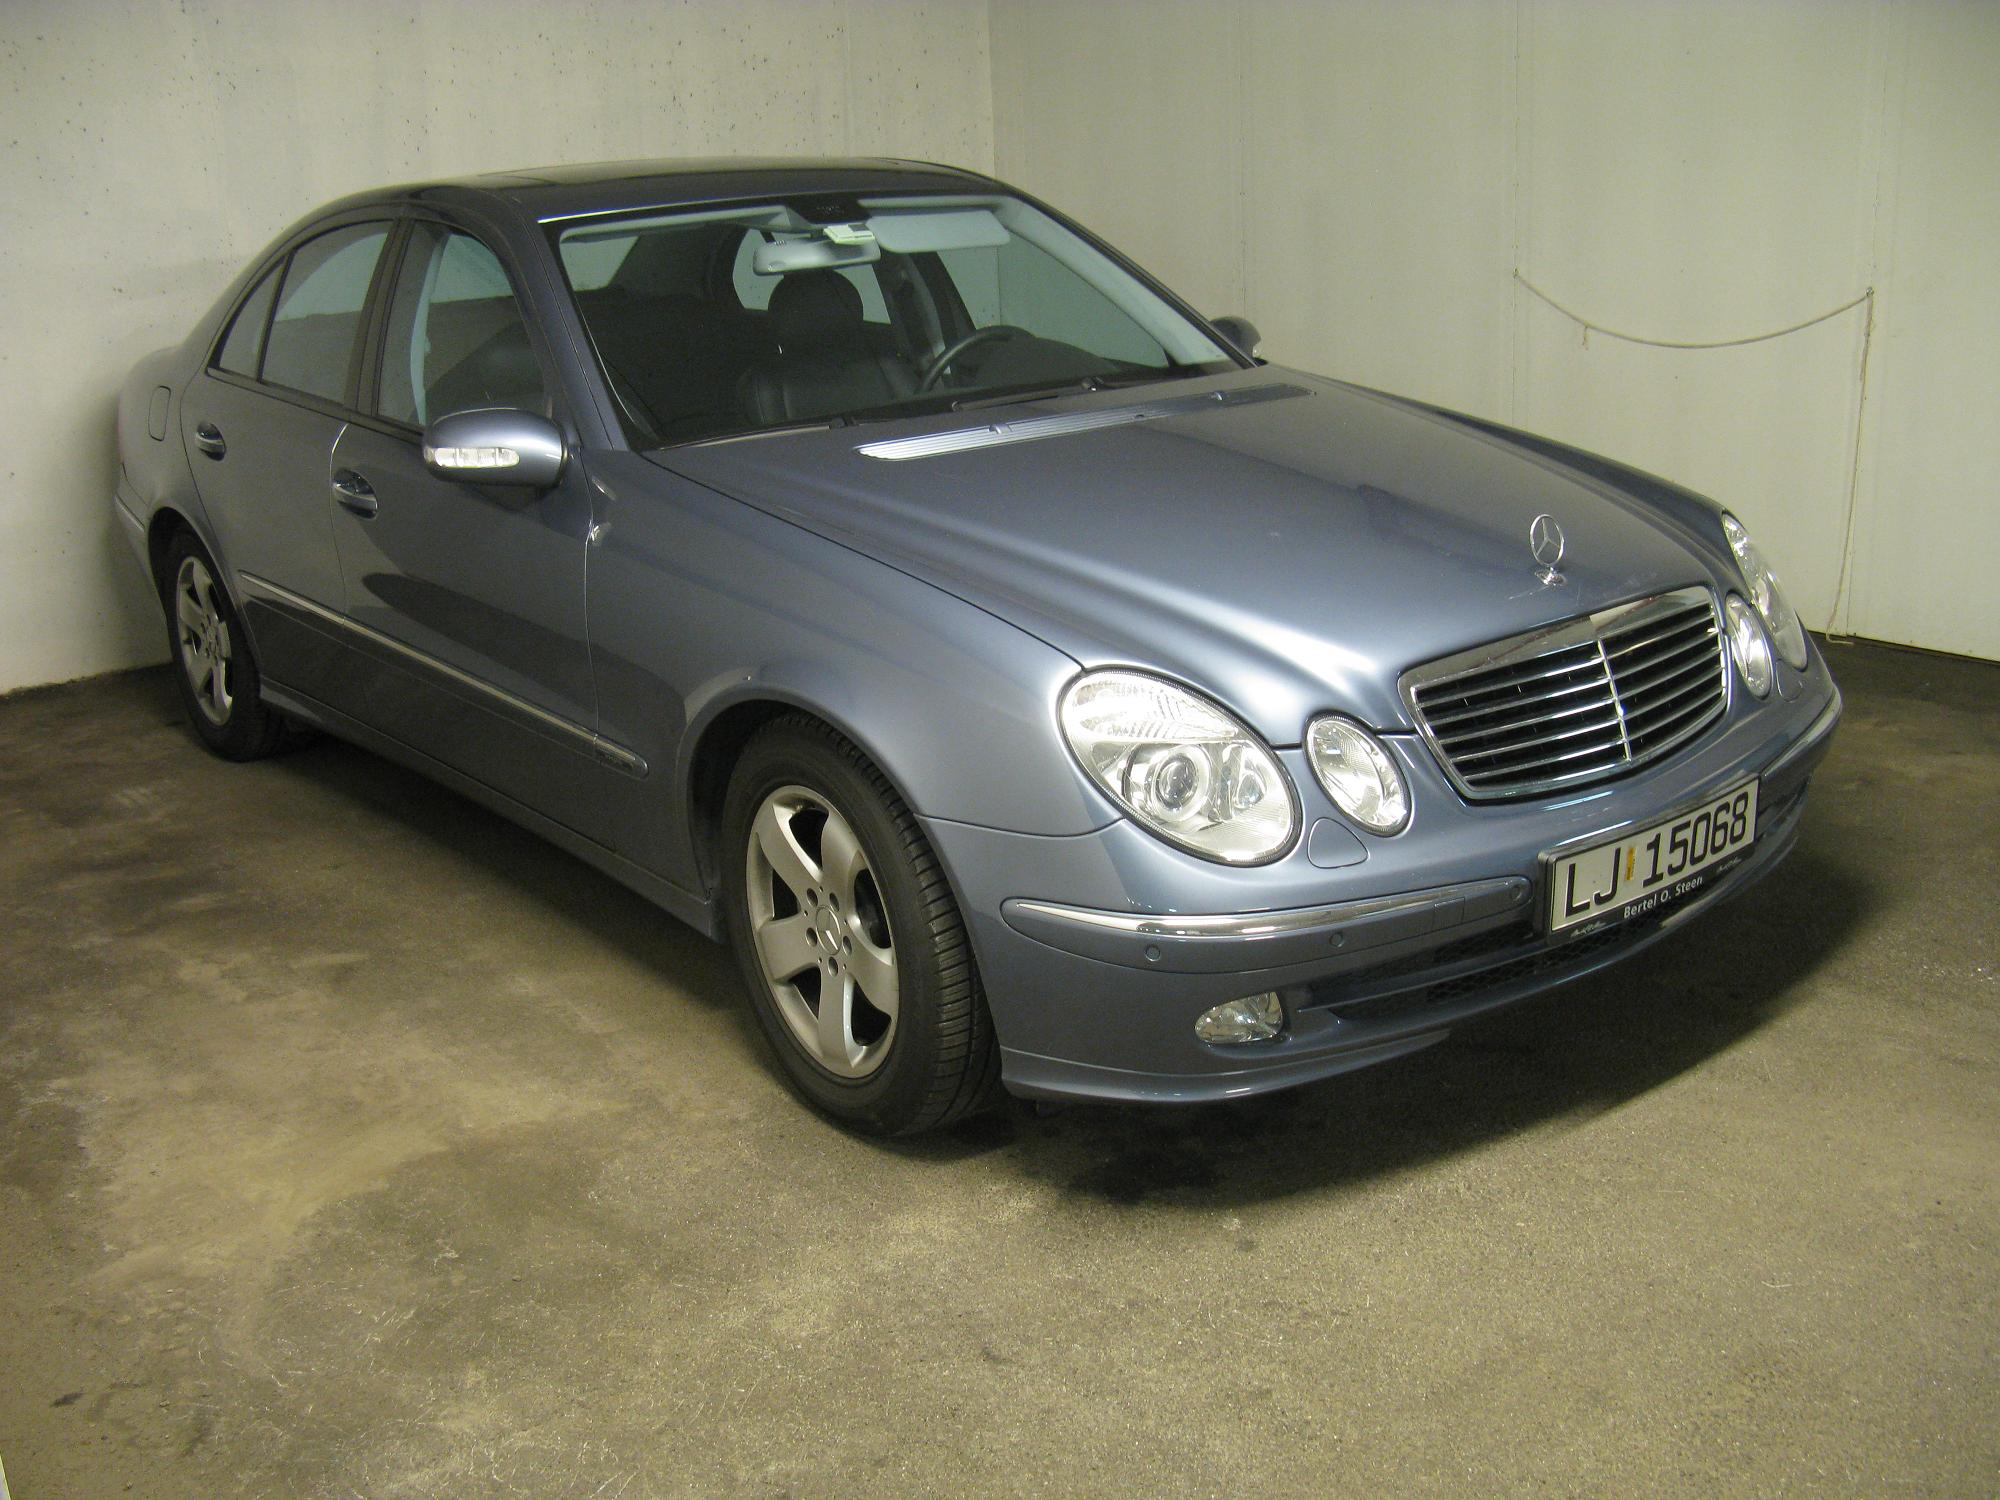 File:Mercedes W211 front 20080127.jpg - Wikimedia Commons